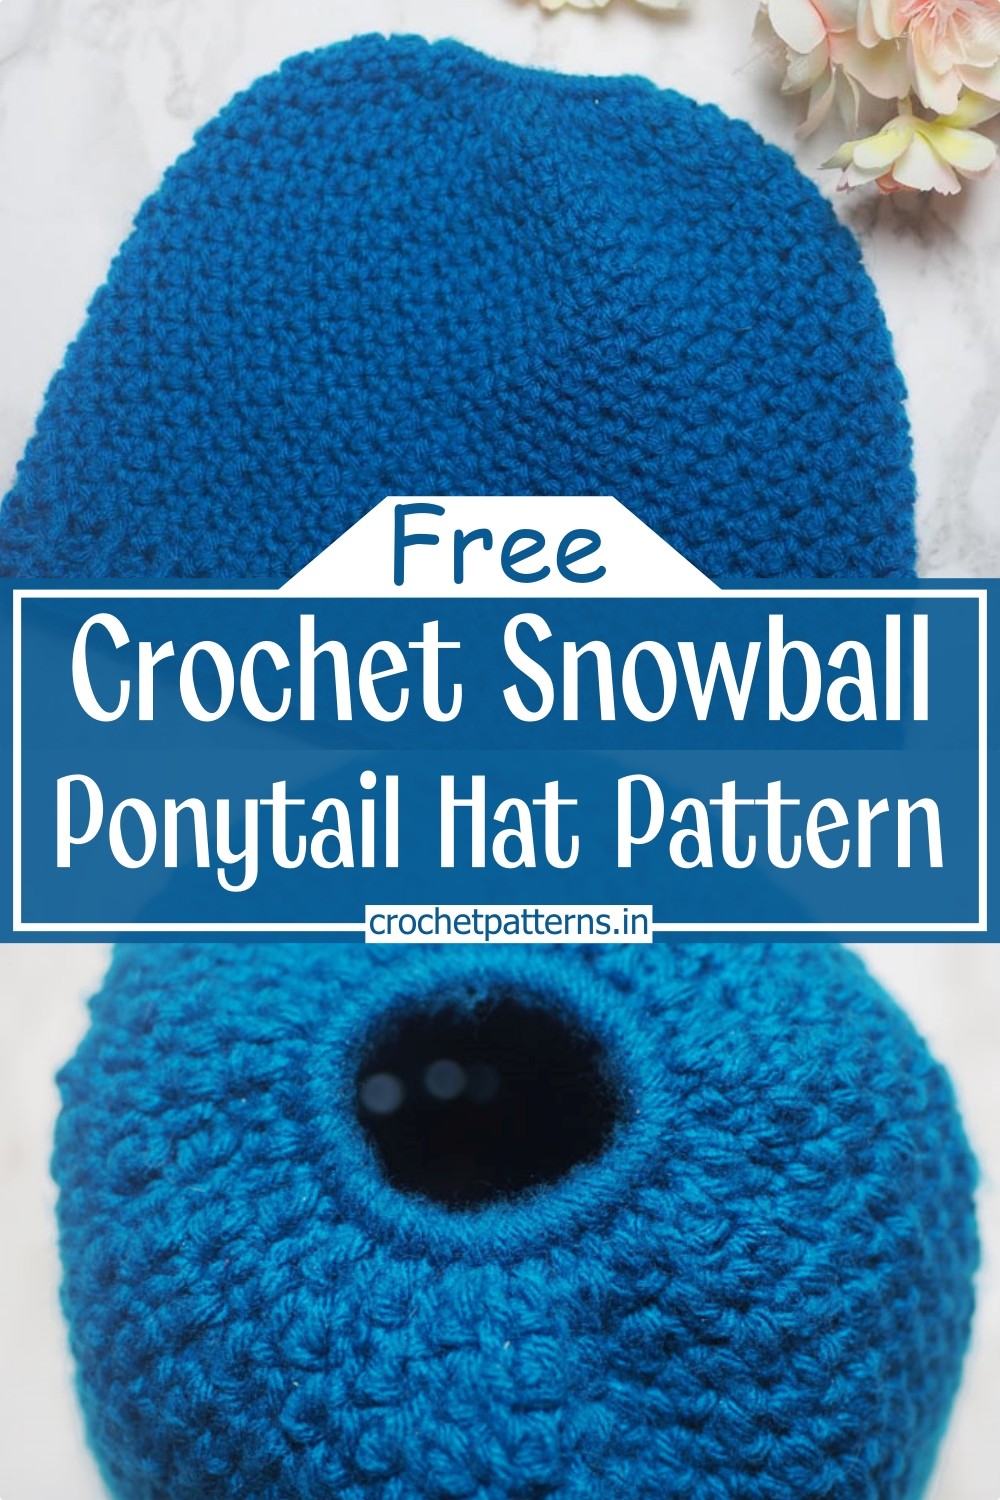  Crochet Snowball Ponytail Hat Pattern